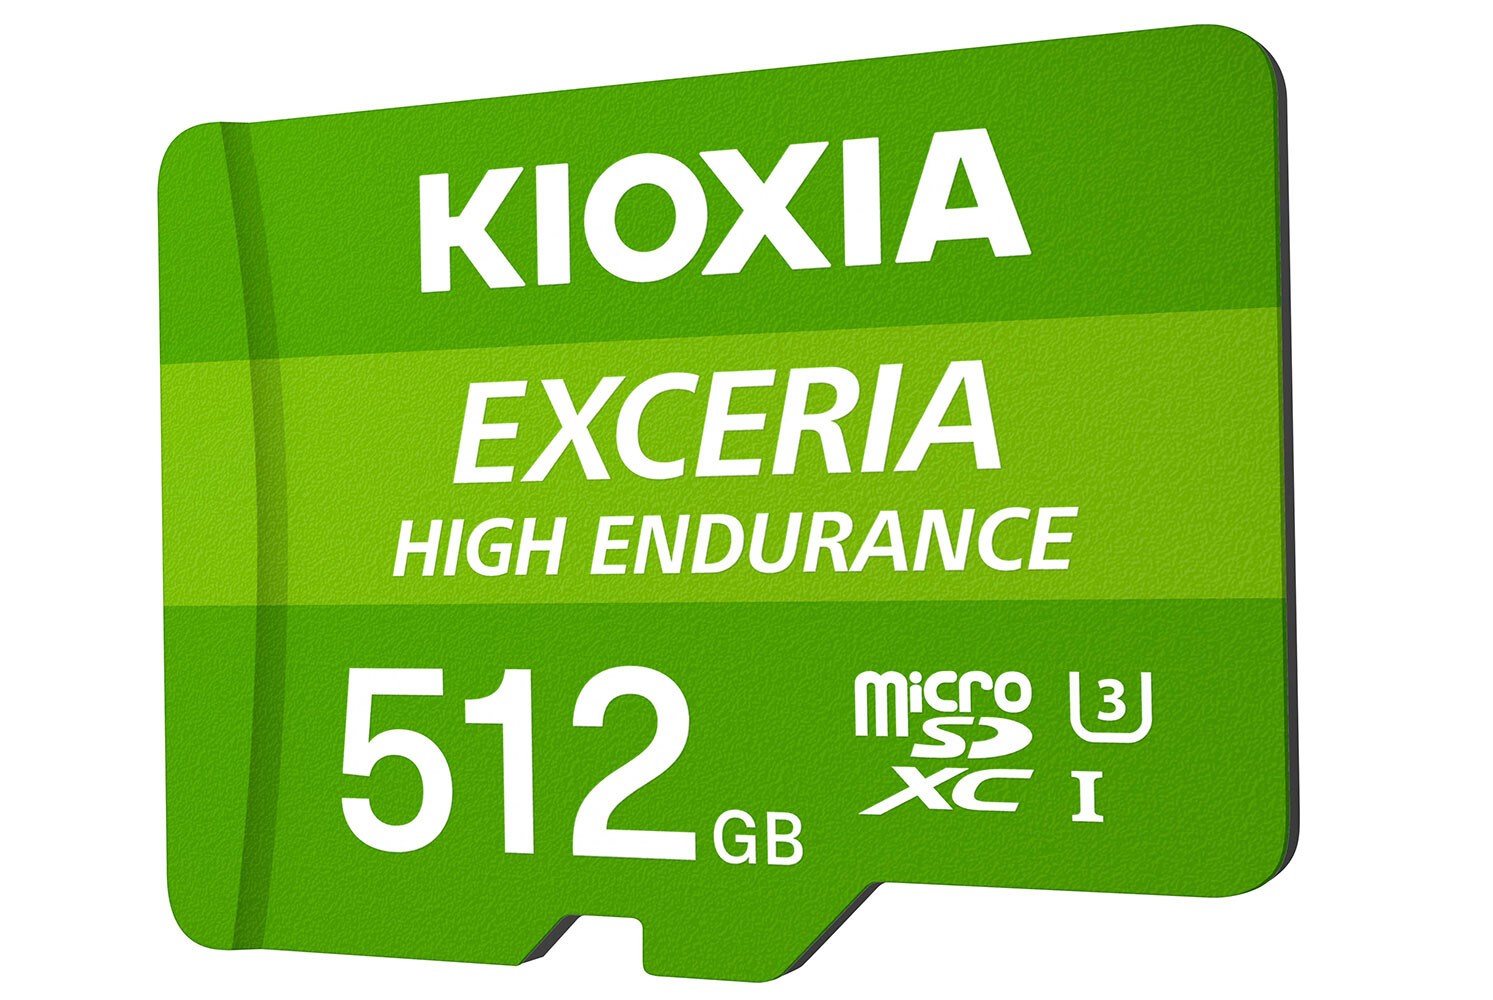 Kioxia Exceria High Endurance 512GB microSD